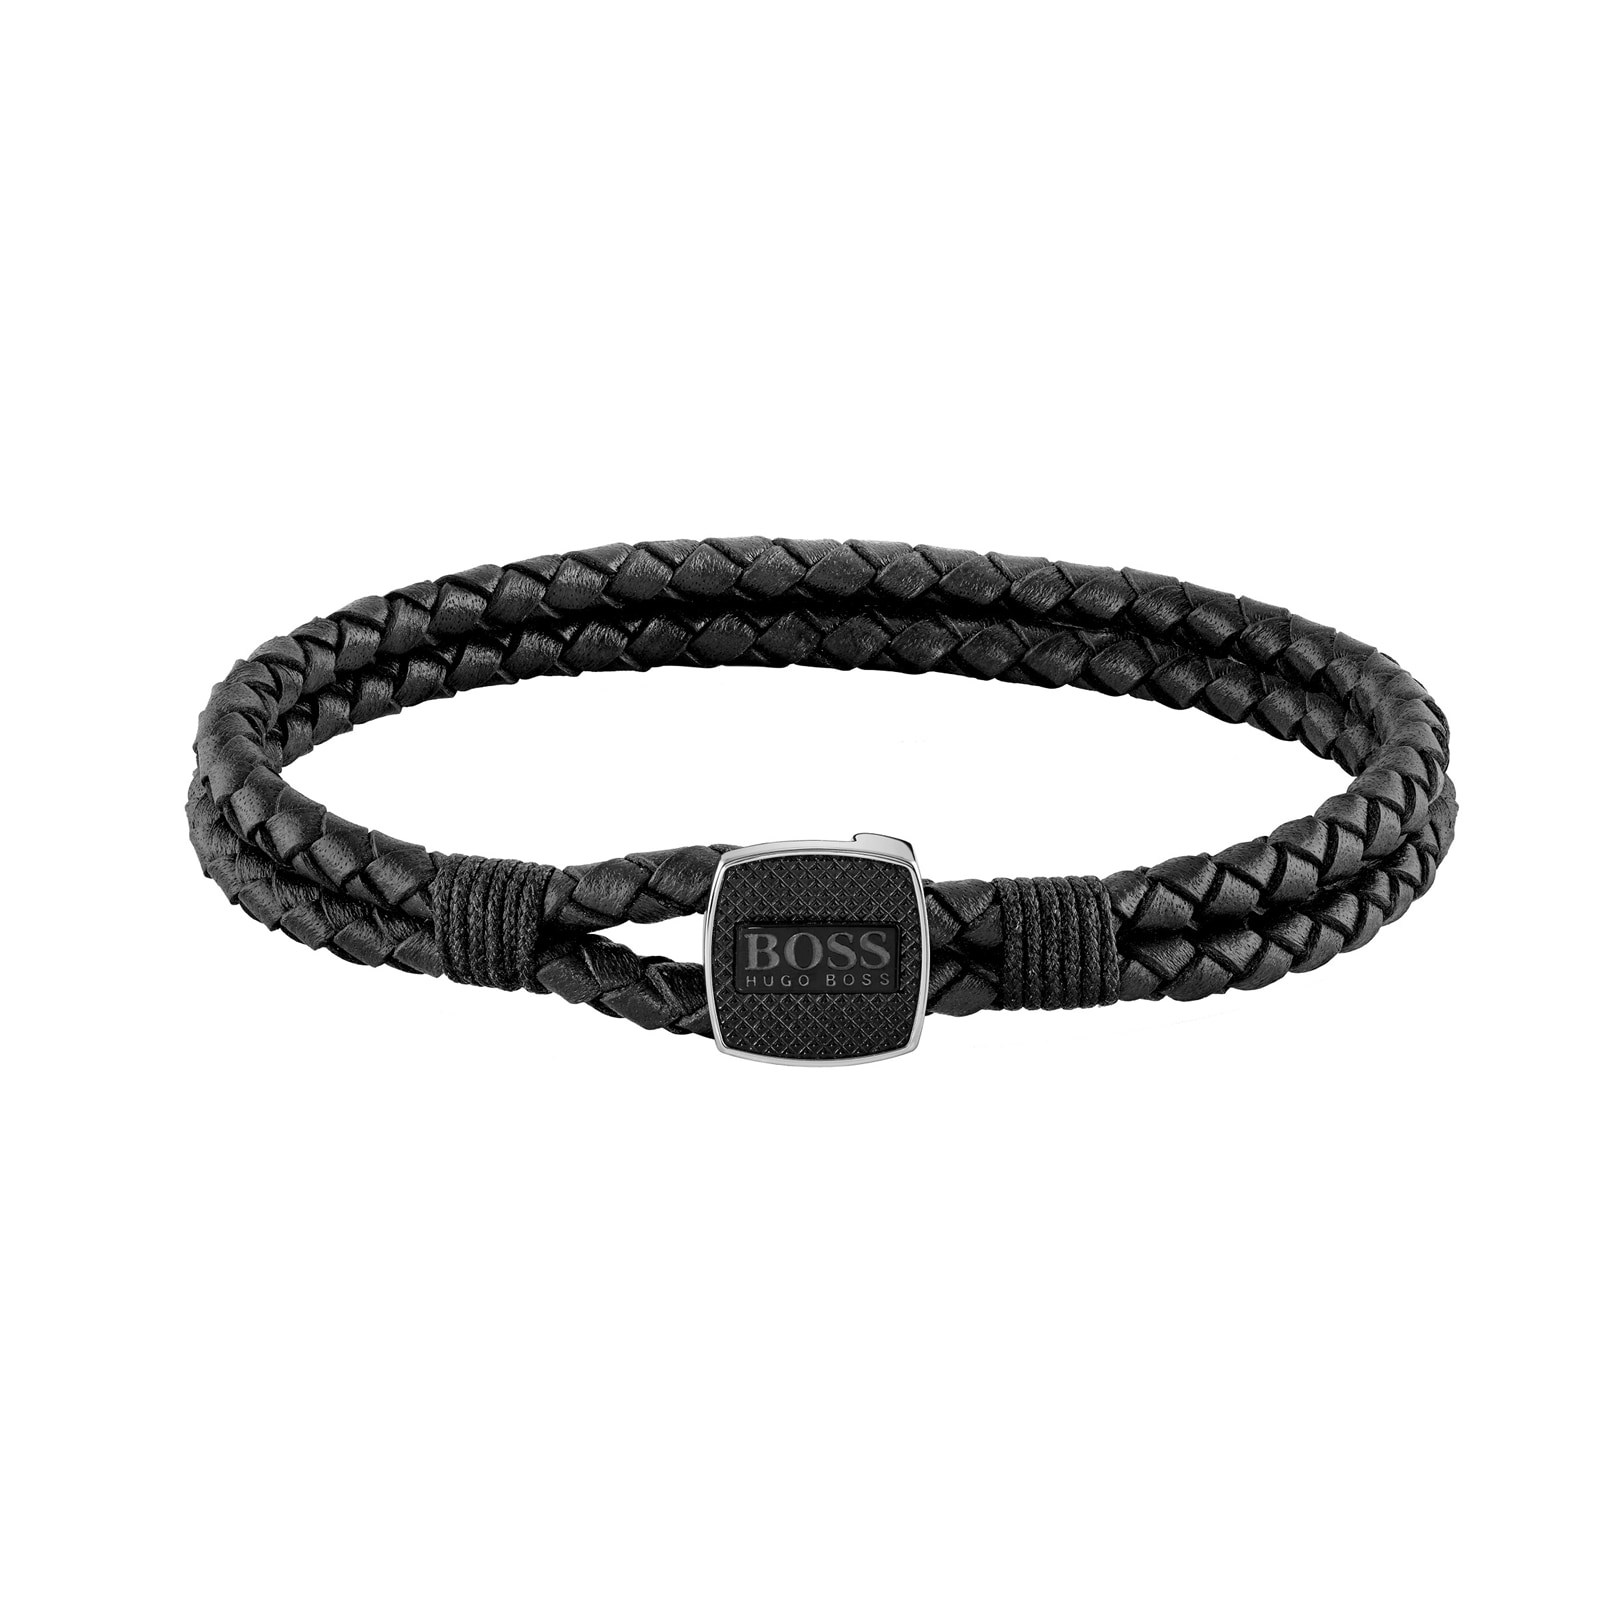 Seal Black Leather Stainless Steel Bracelet